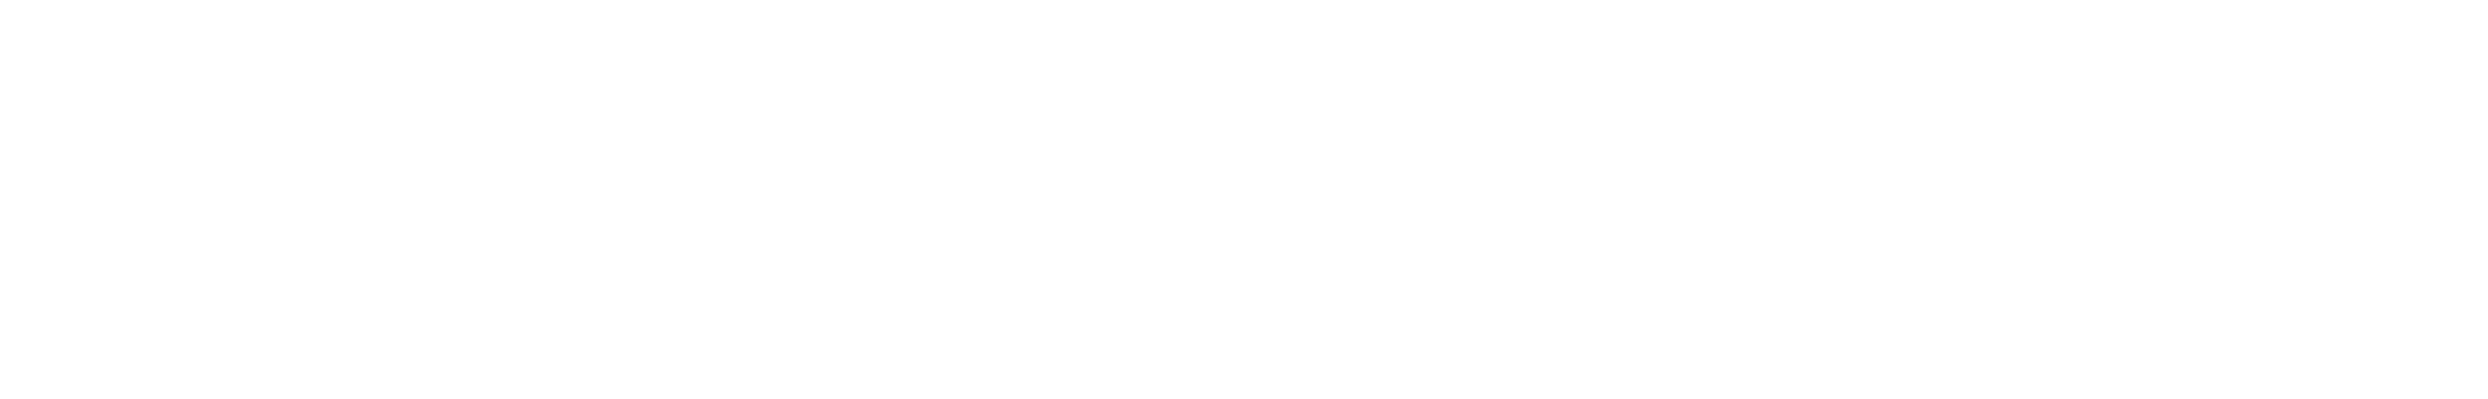 Bryan A Lowe & Associates Professional Law Corporation